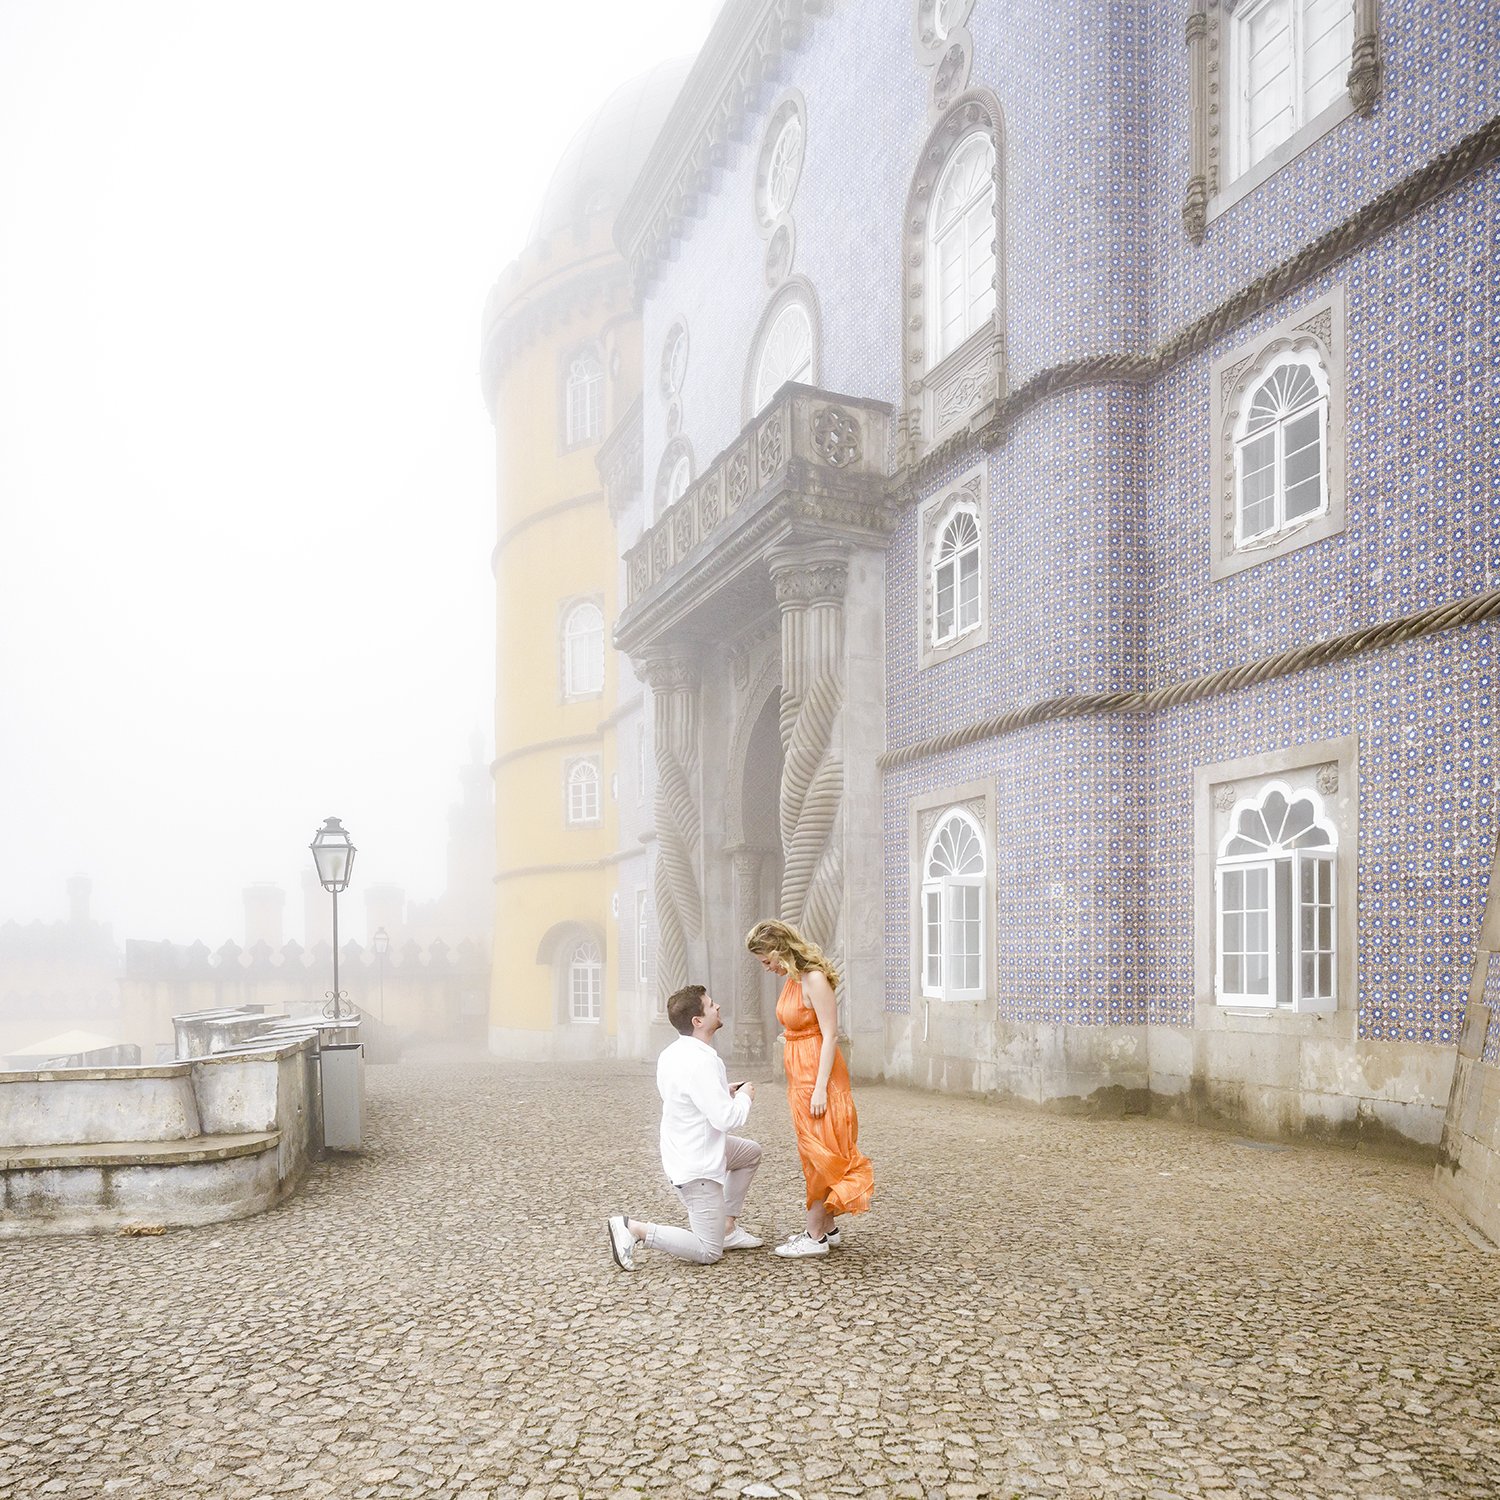 pena-palace-sintra-surprise-wedding-proposal-photographer-ana-lucia-terra-fotografia-6.jpg